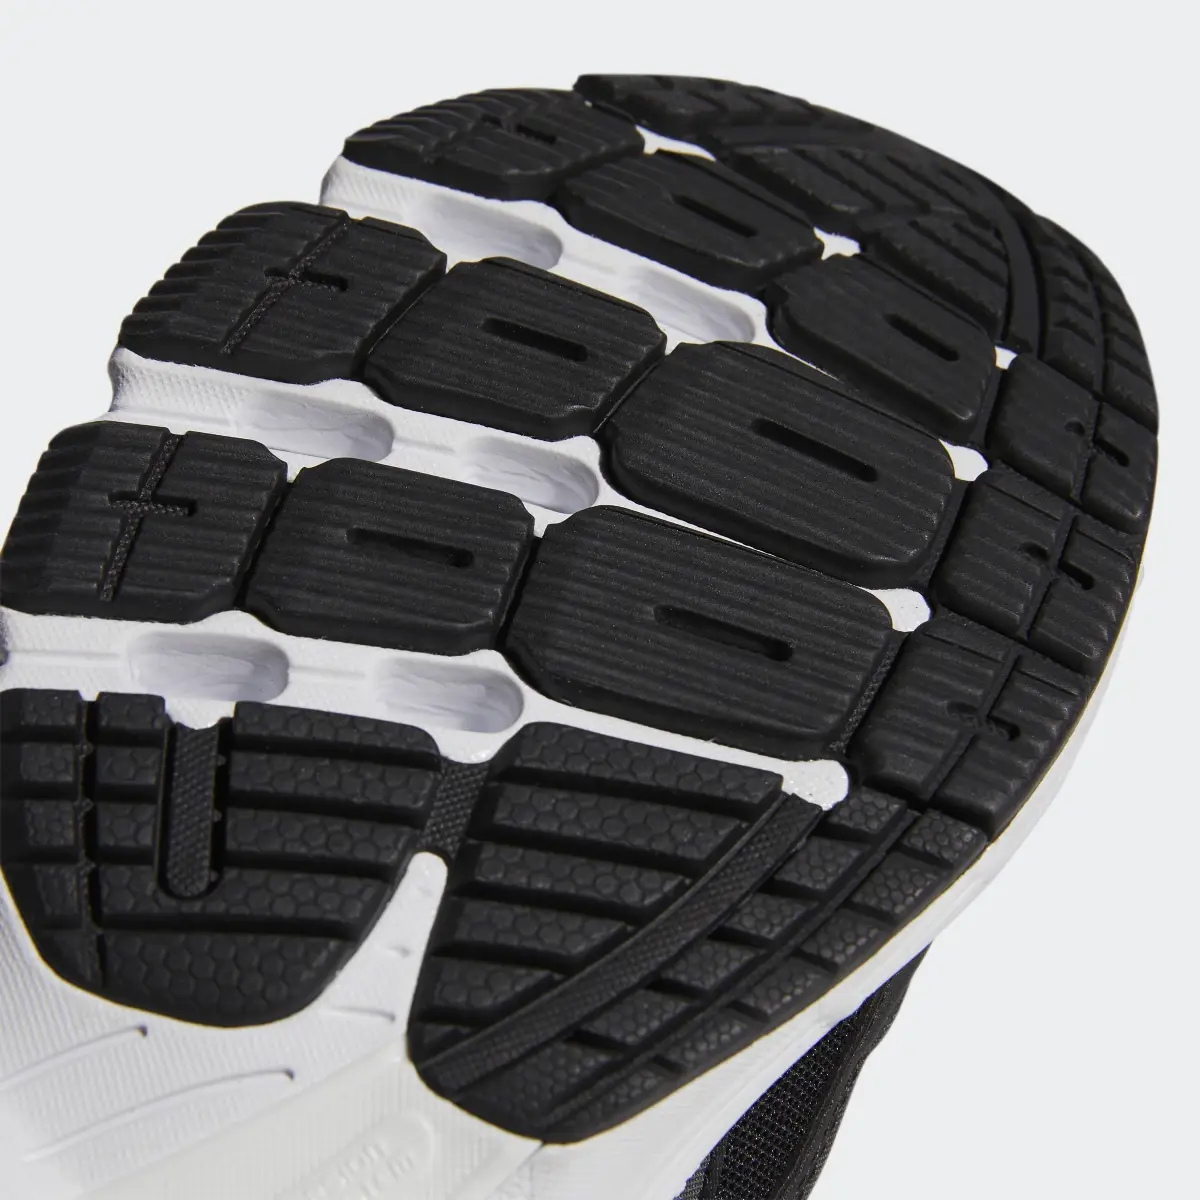 Adidas Astir Shoes. 3